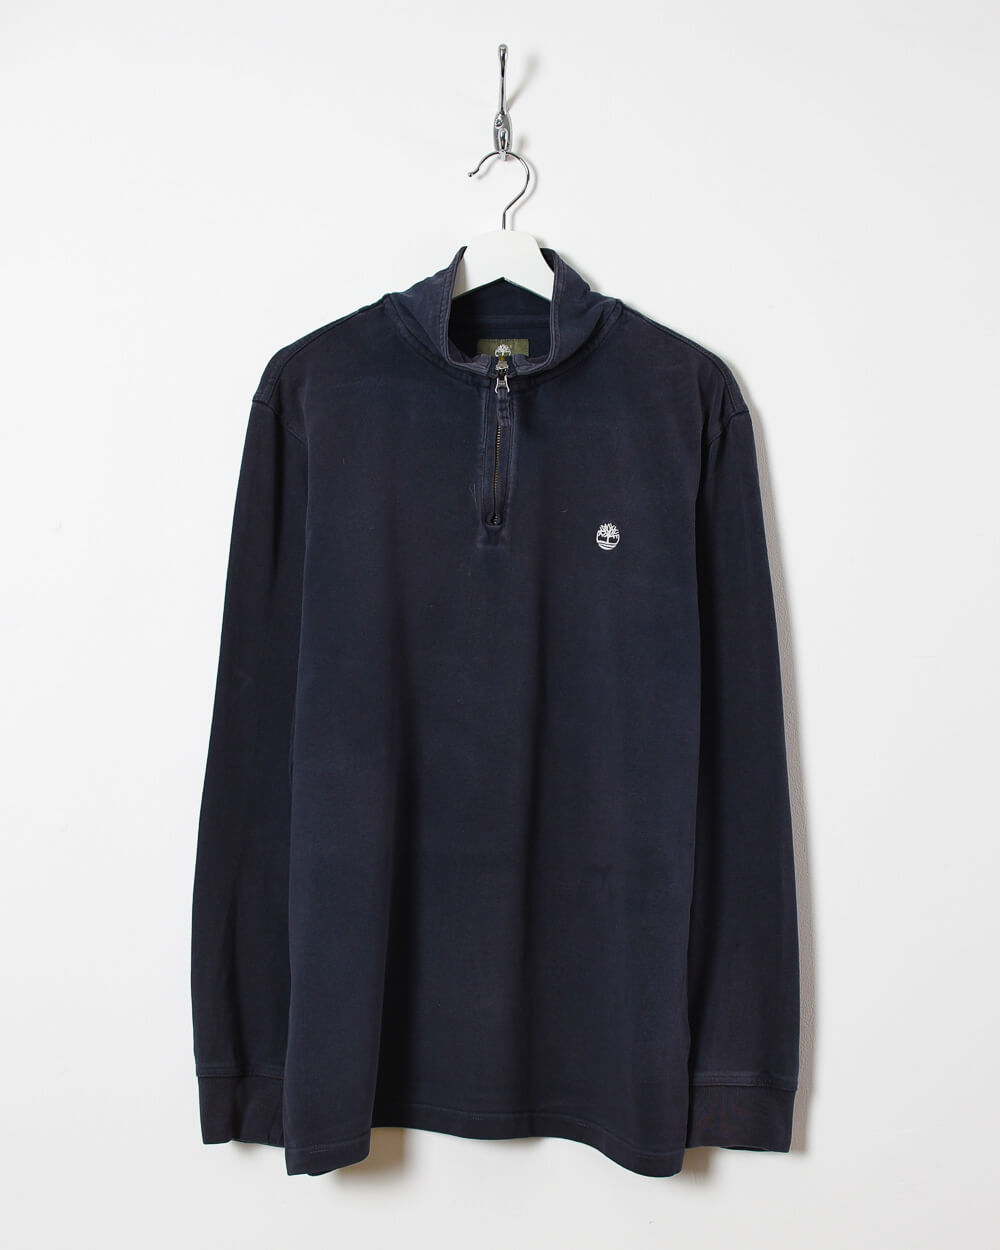 Timberland 1/4 Zip Sweatshirt - Medium - Domno Vintage 90s, 80s, 00s Retro and Vintage Clothing 